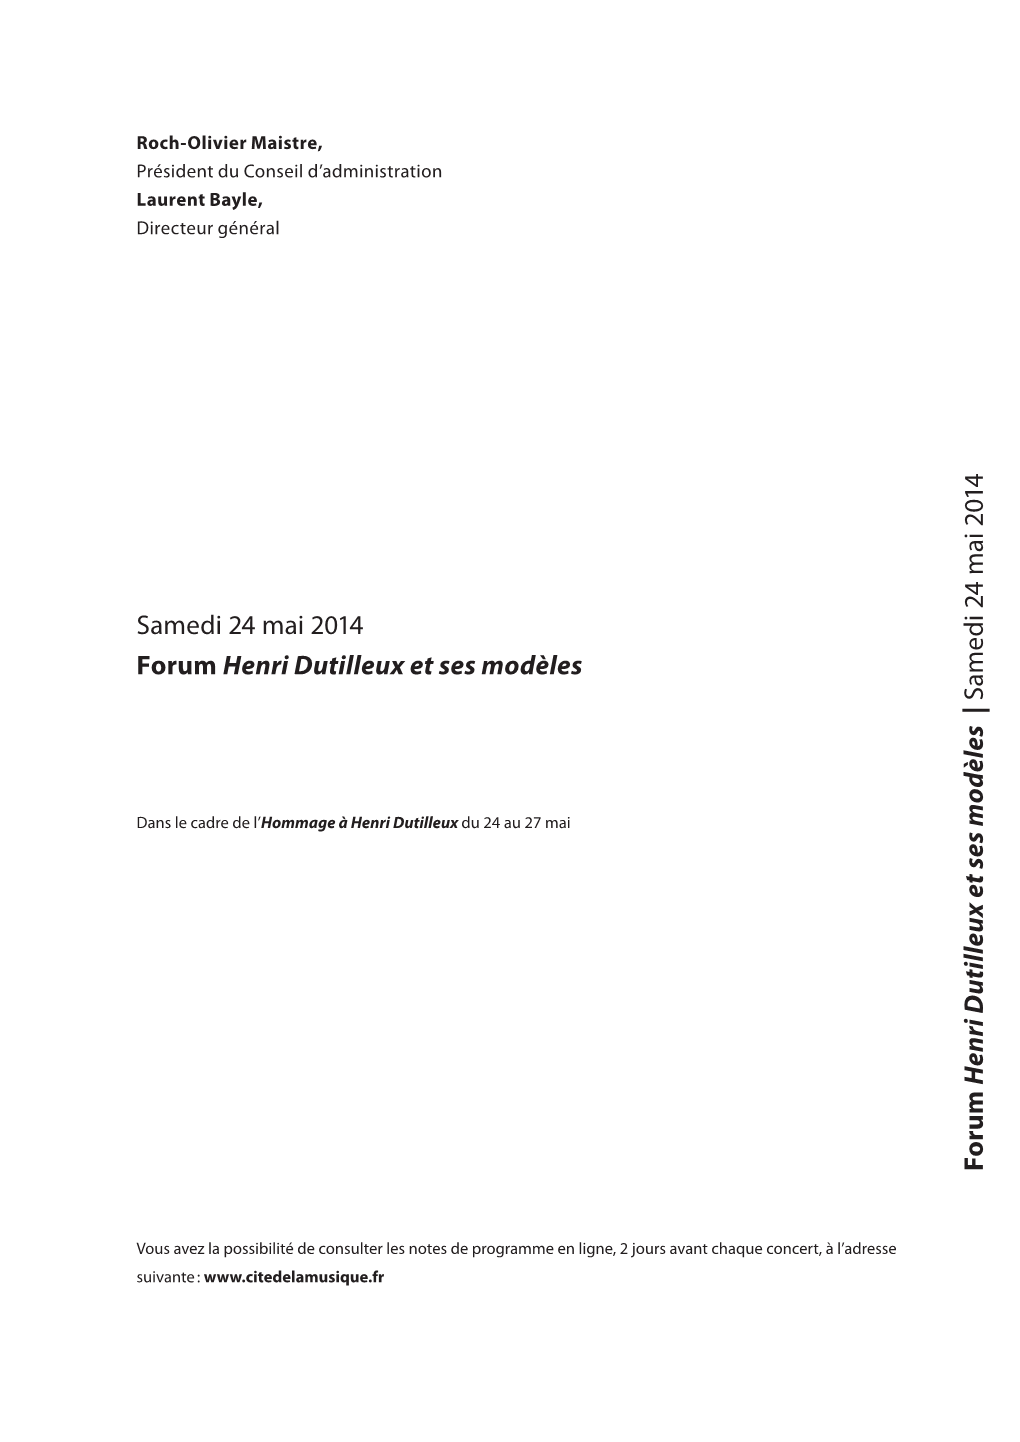 Samedi 24 Mai 2014 Forum Henri Dutilleux Et Ses Modèles F Oru M H En Ri D U Tilleu X Et Ses Mod Èles